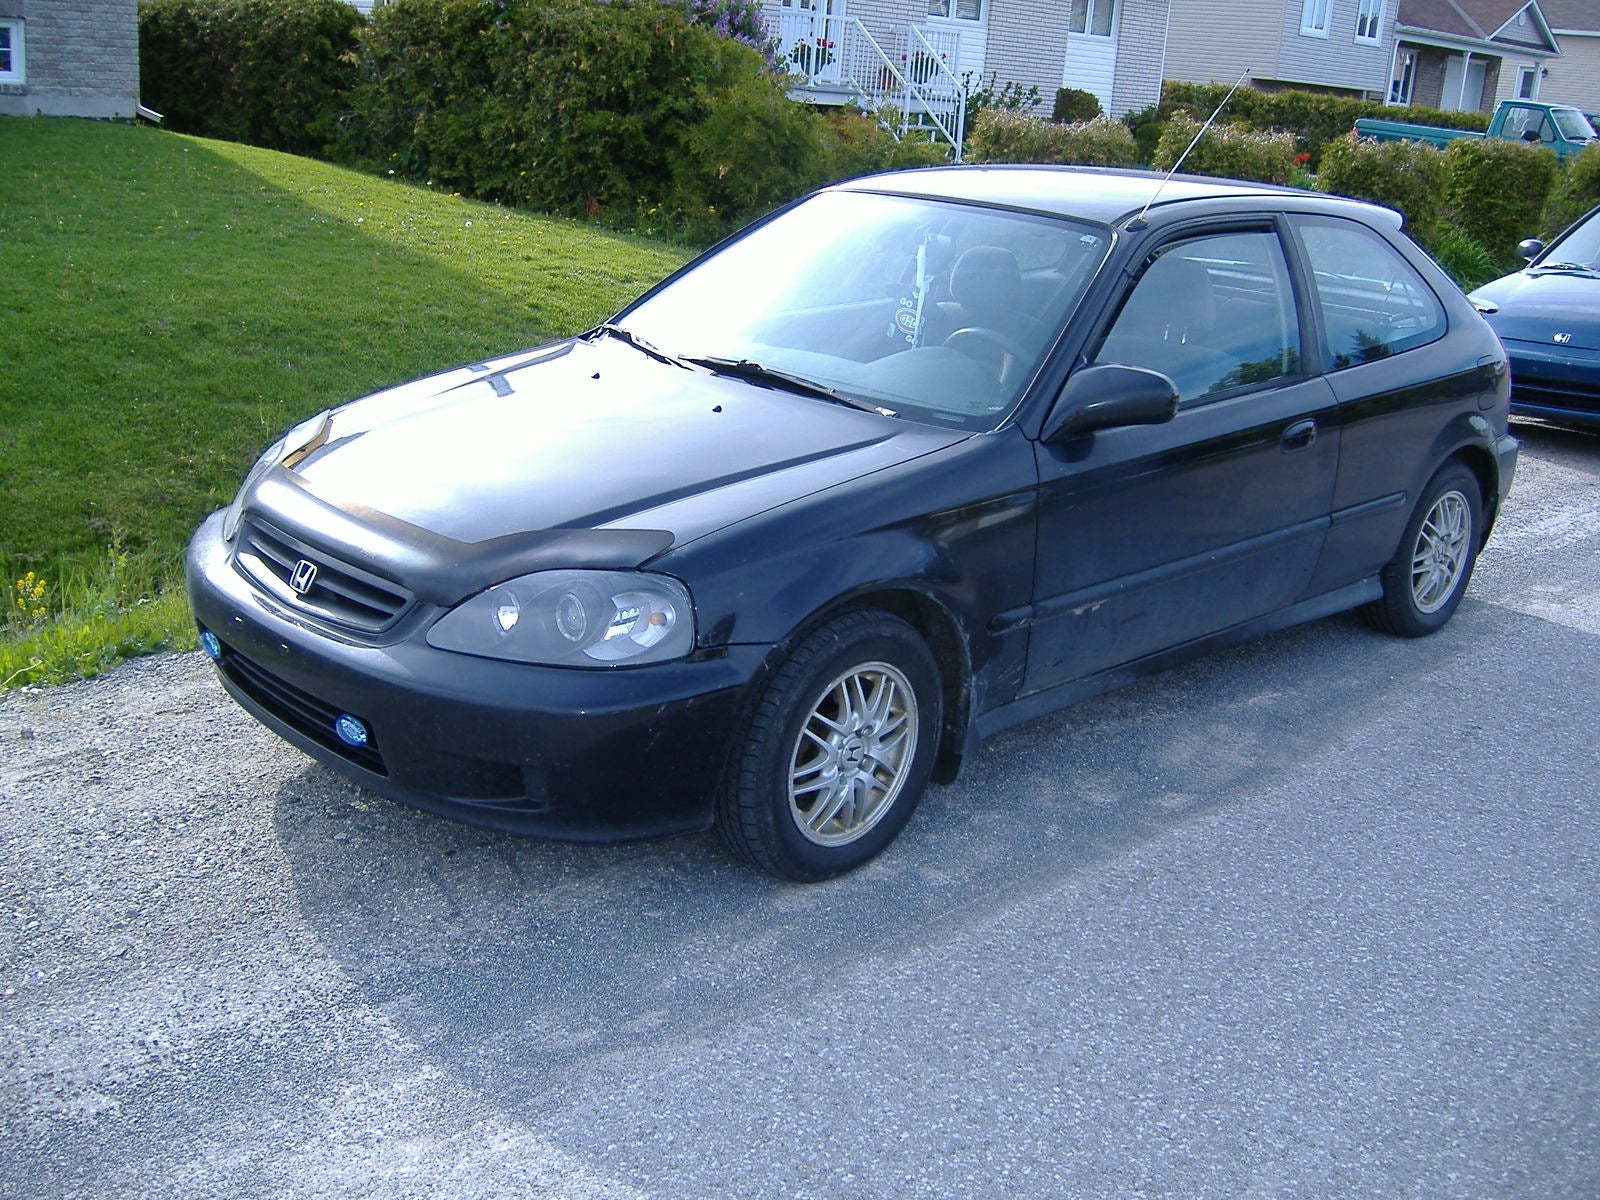 2000 Civic hatchback honda picture #1